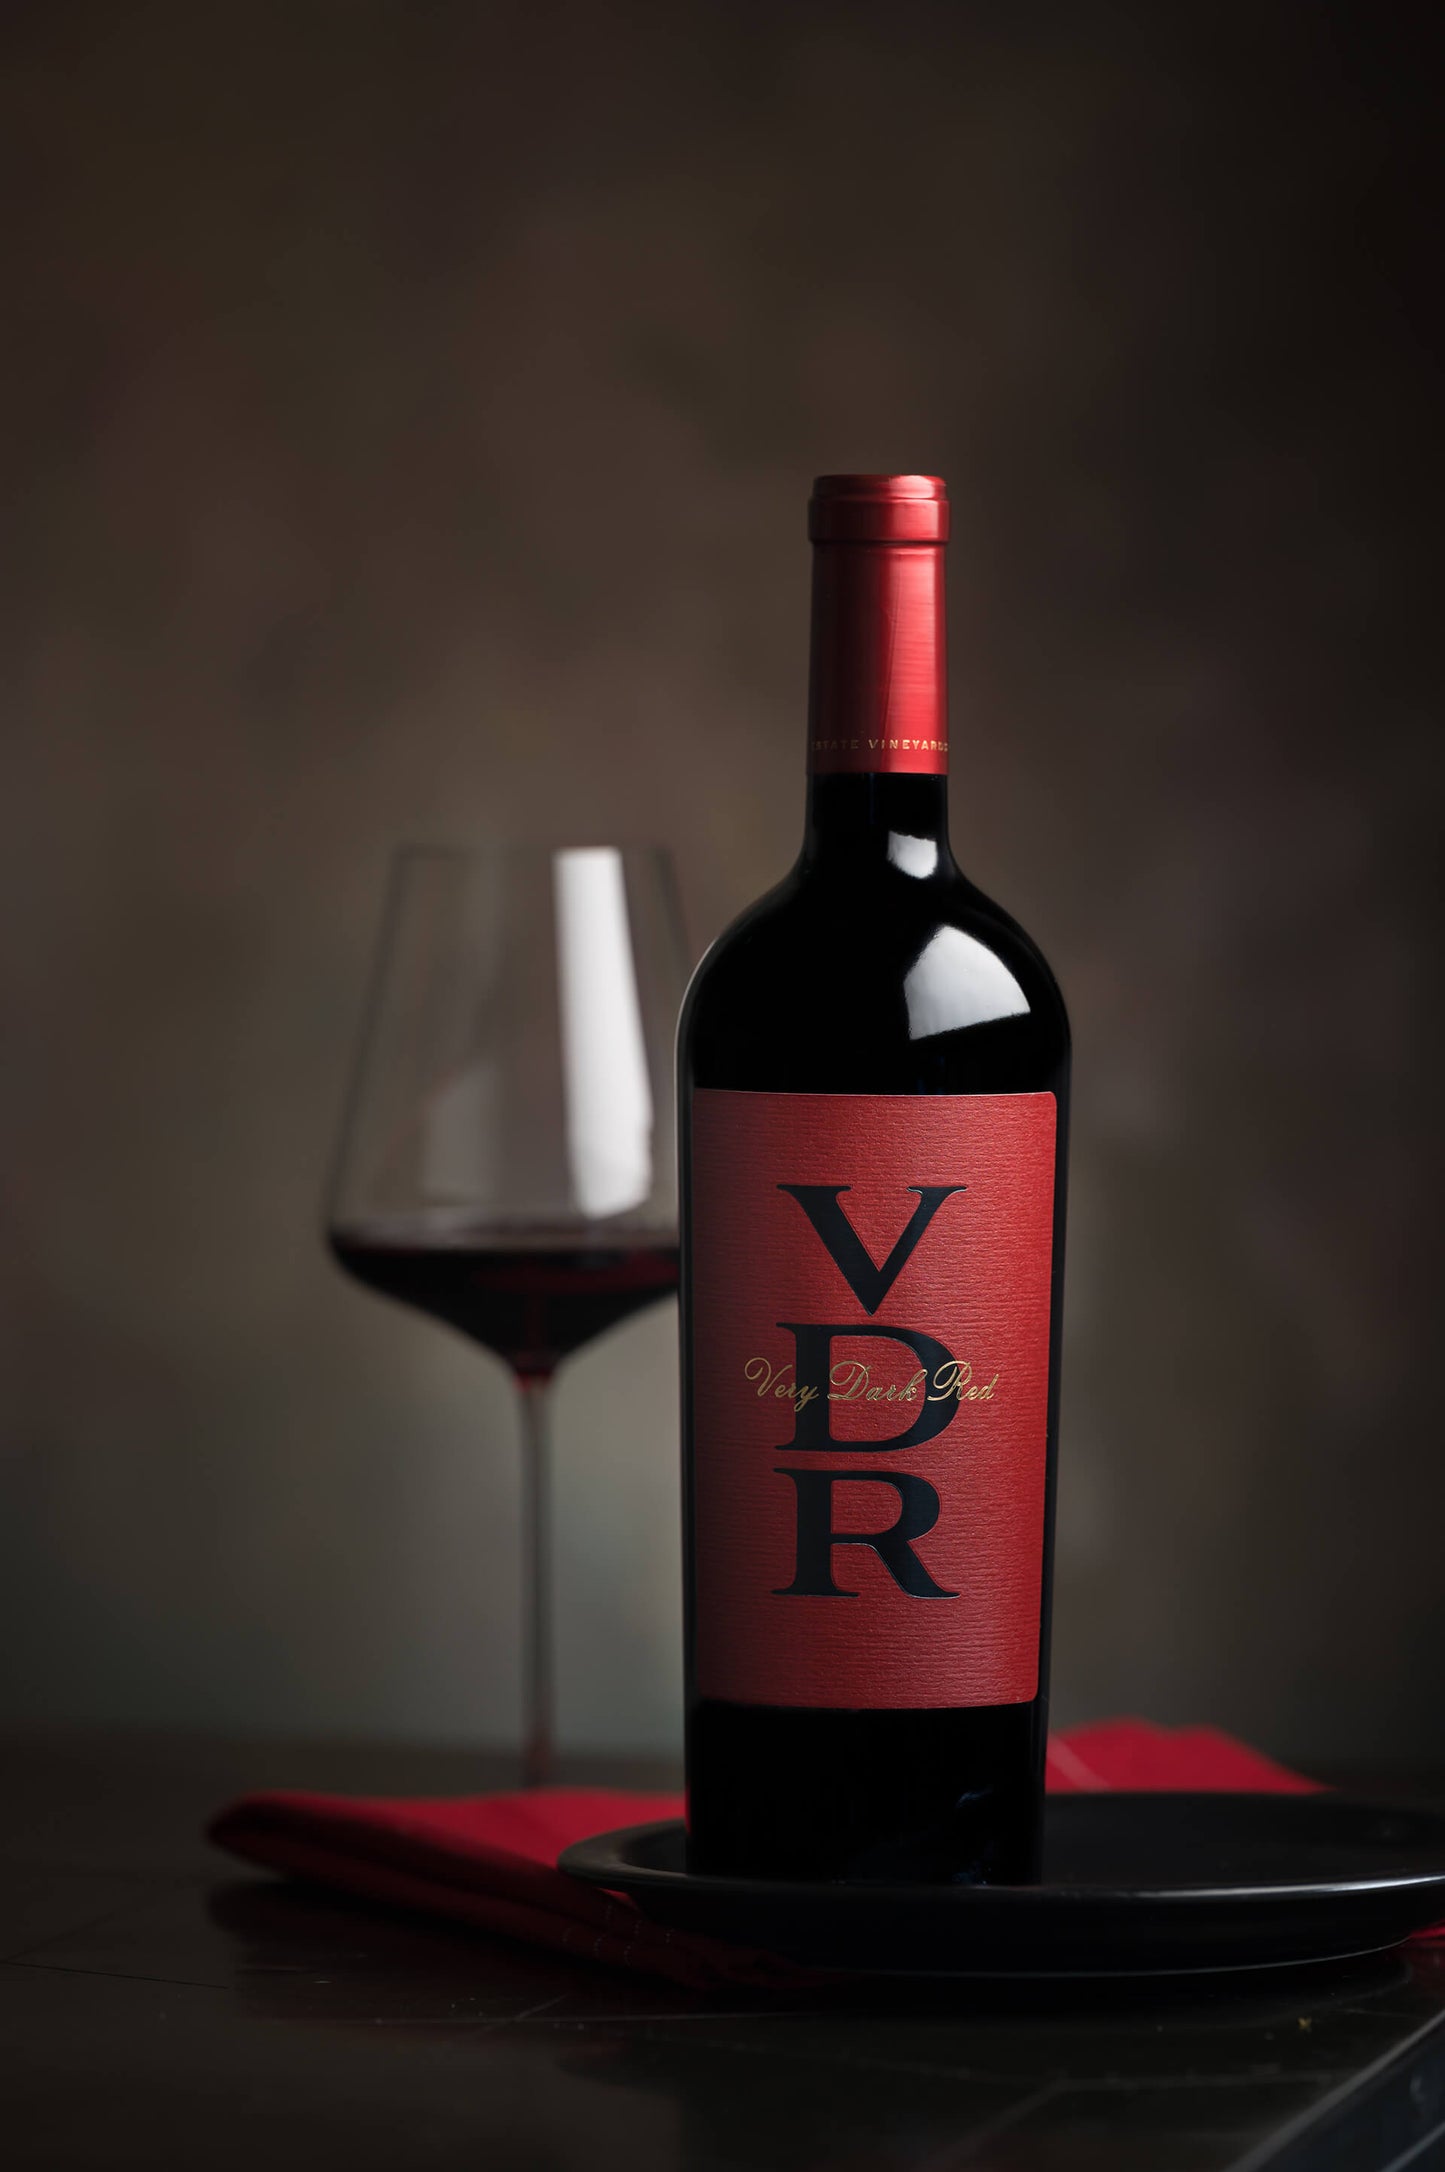 Bottle of Very Dark Red wines 